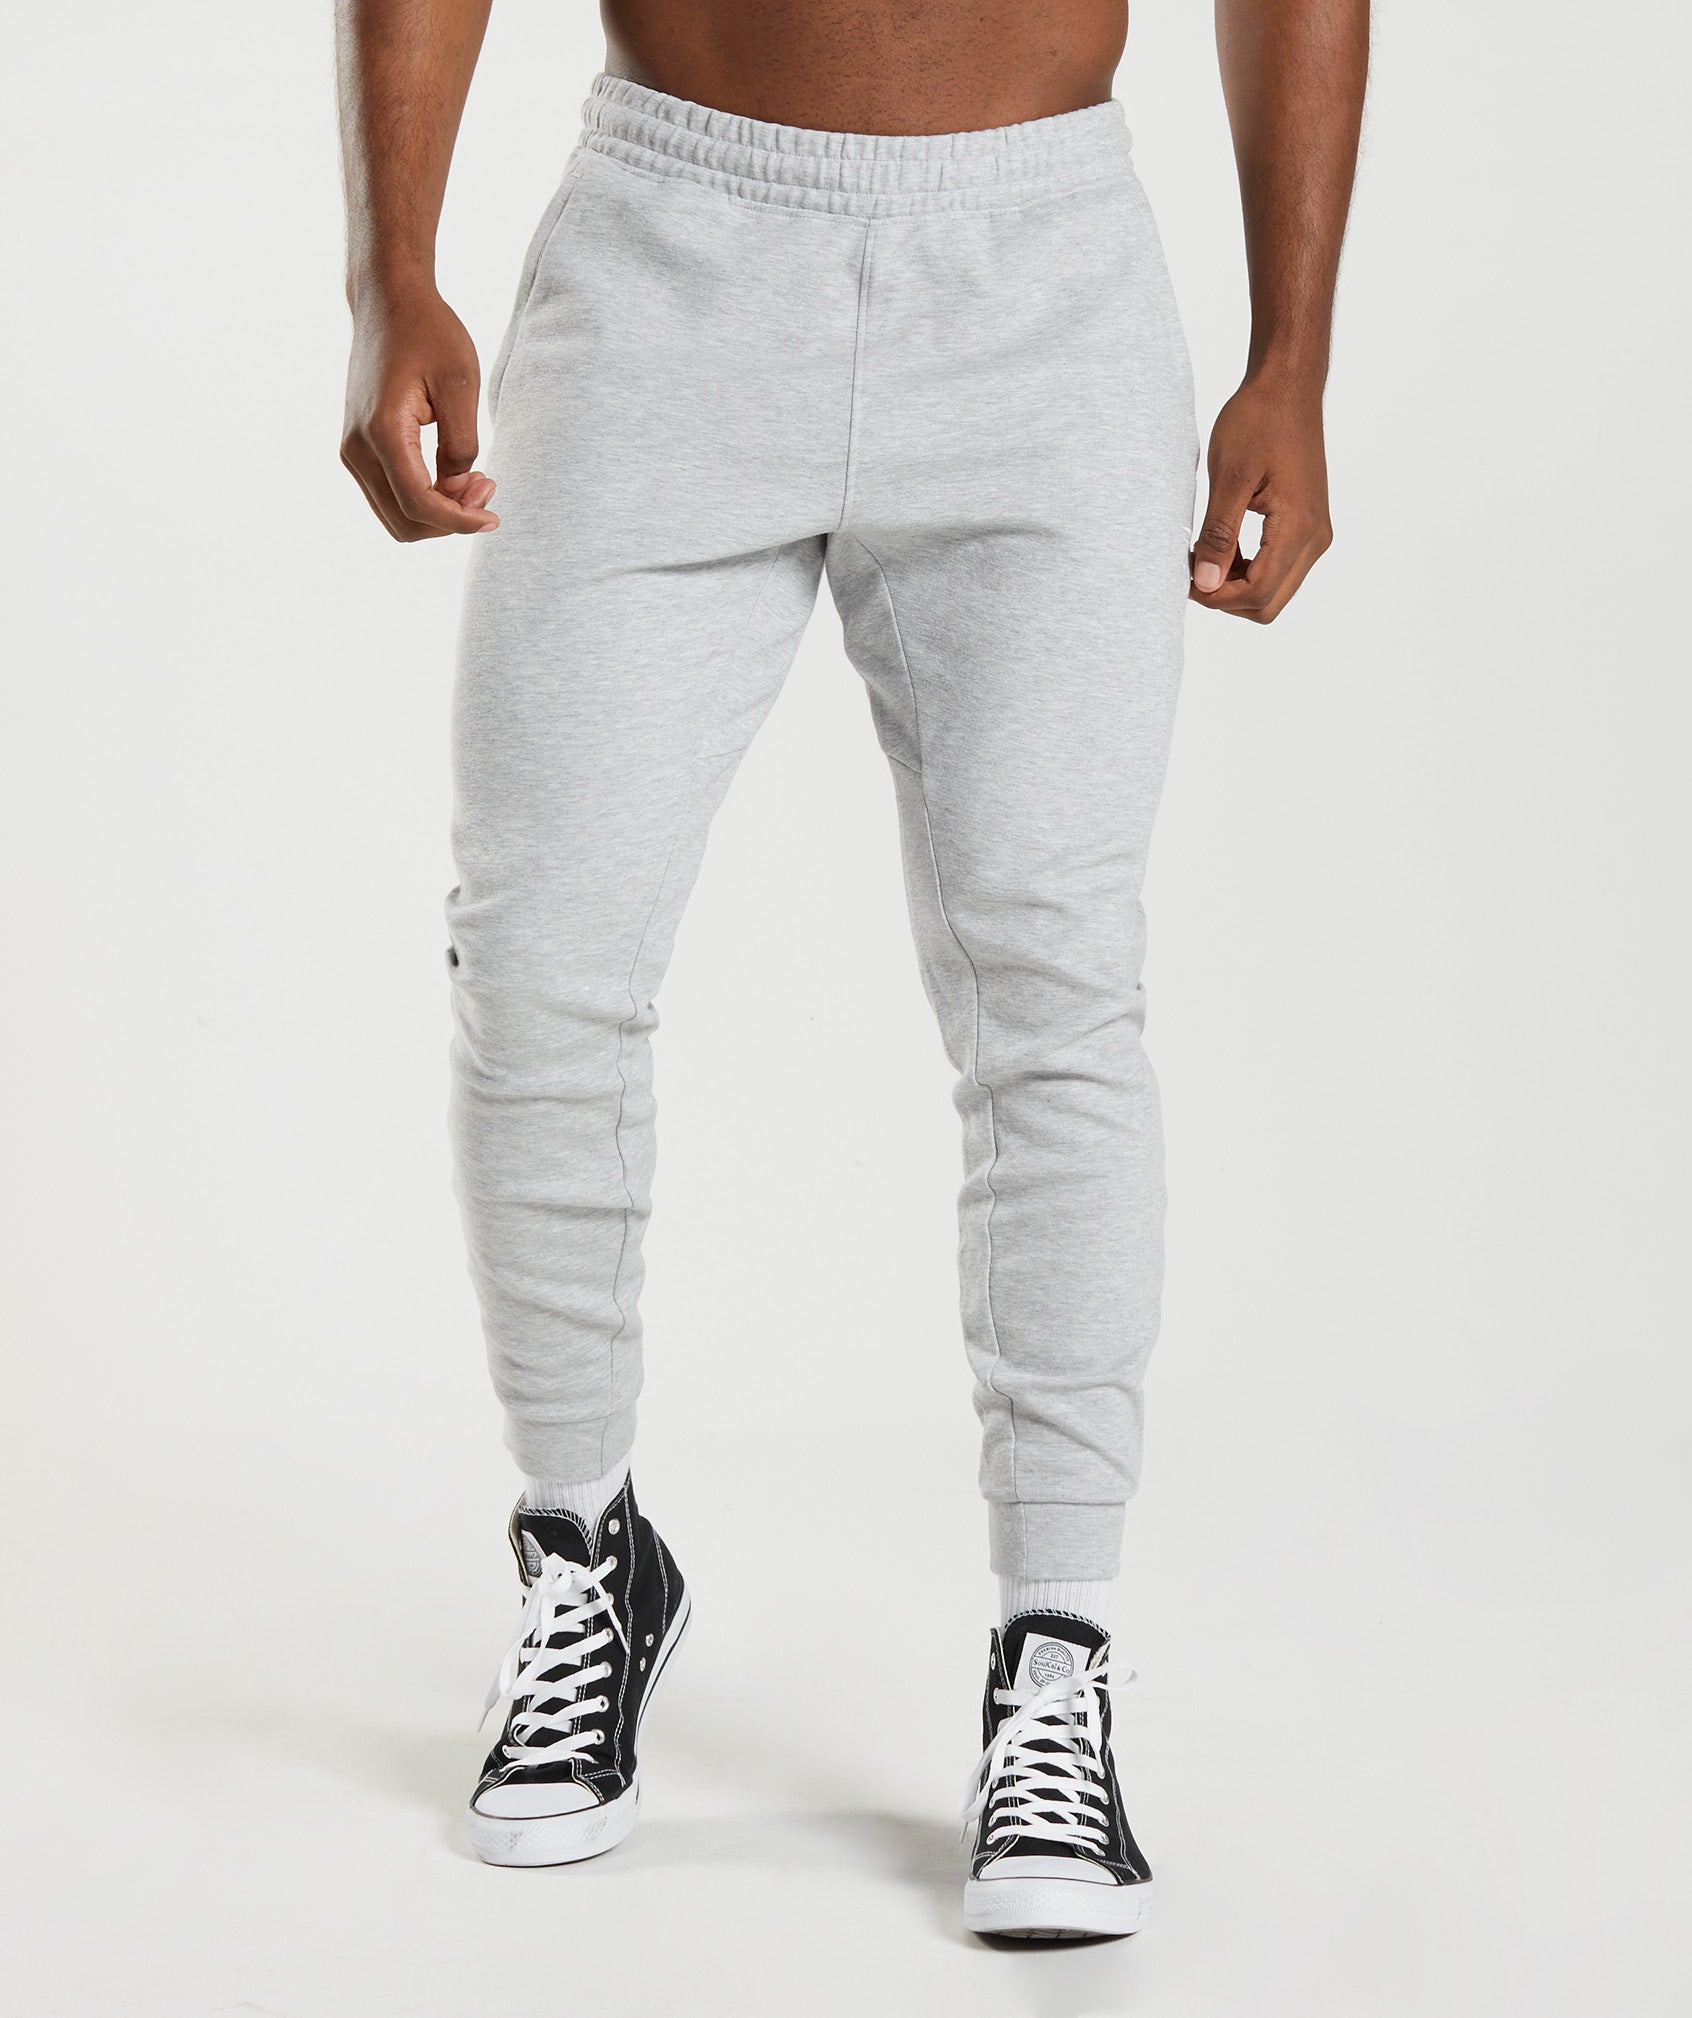 Reebok small logo sweatpants in light gray